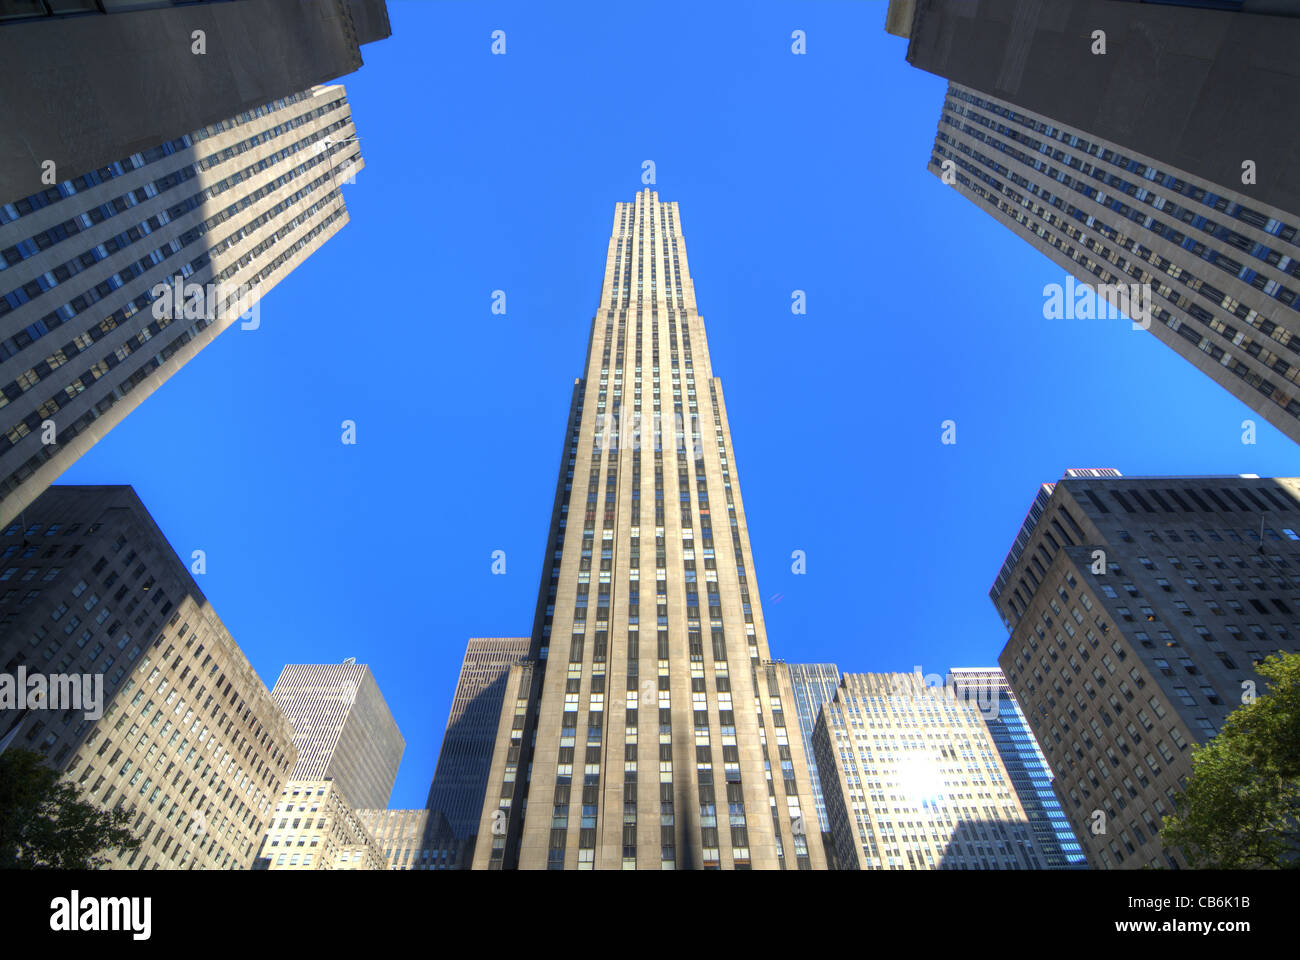 Die Welt berühmten GE Building am Rockefeller Center in New York City. Stockfoto